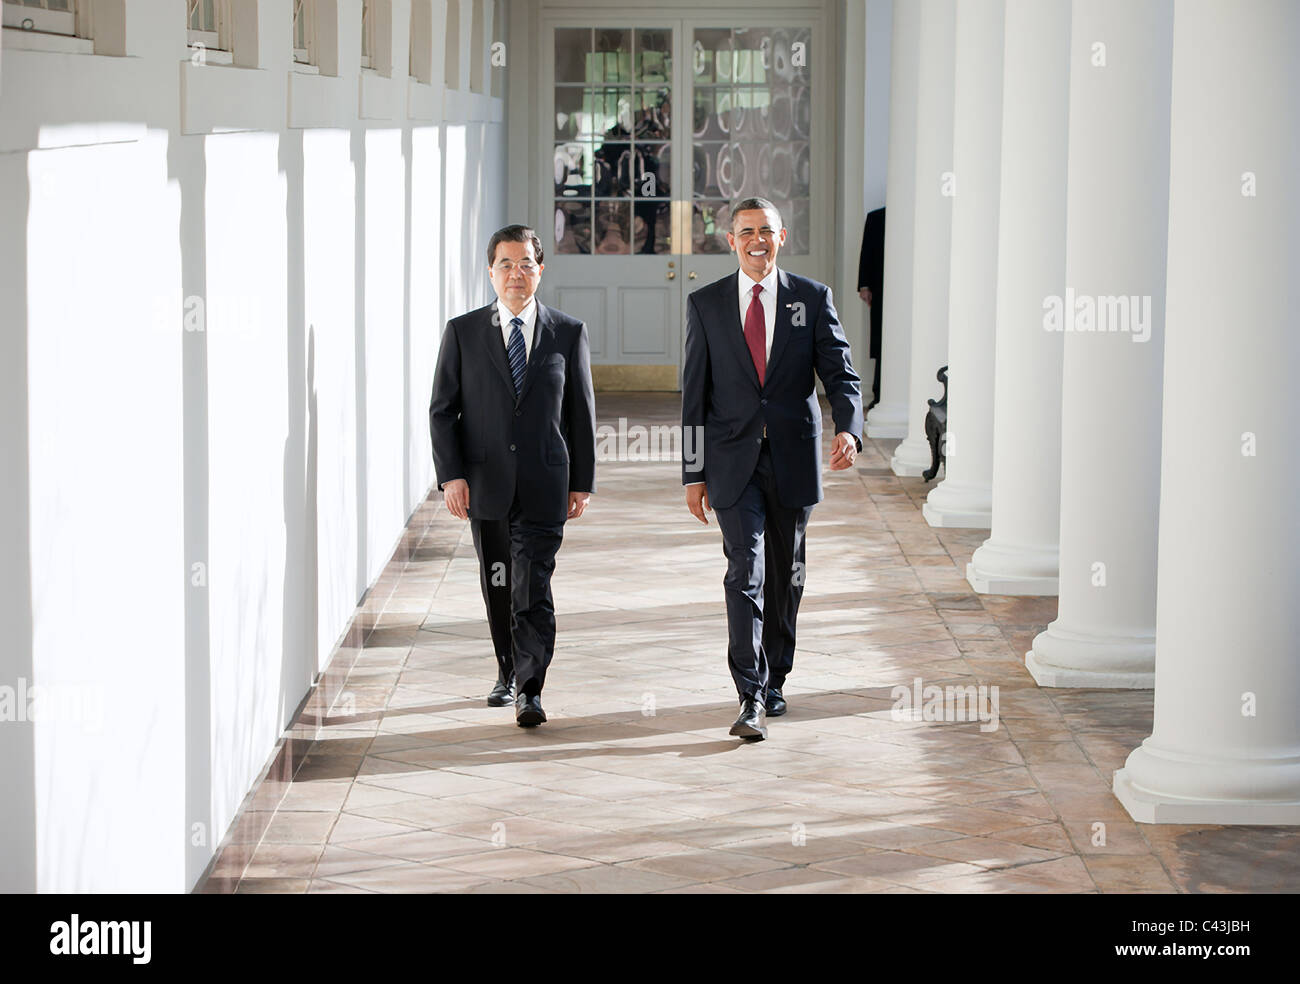 Präsident Barack Obama und Präsident Hu Jintao Chinas Fuß entlang der Kolonnade des weißen Hauses Stockfoto